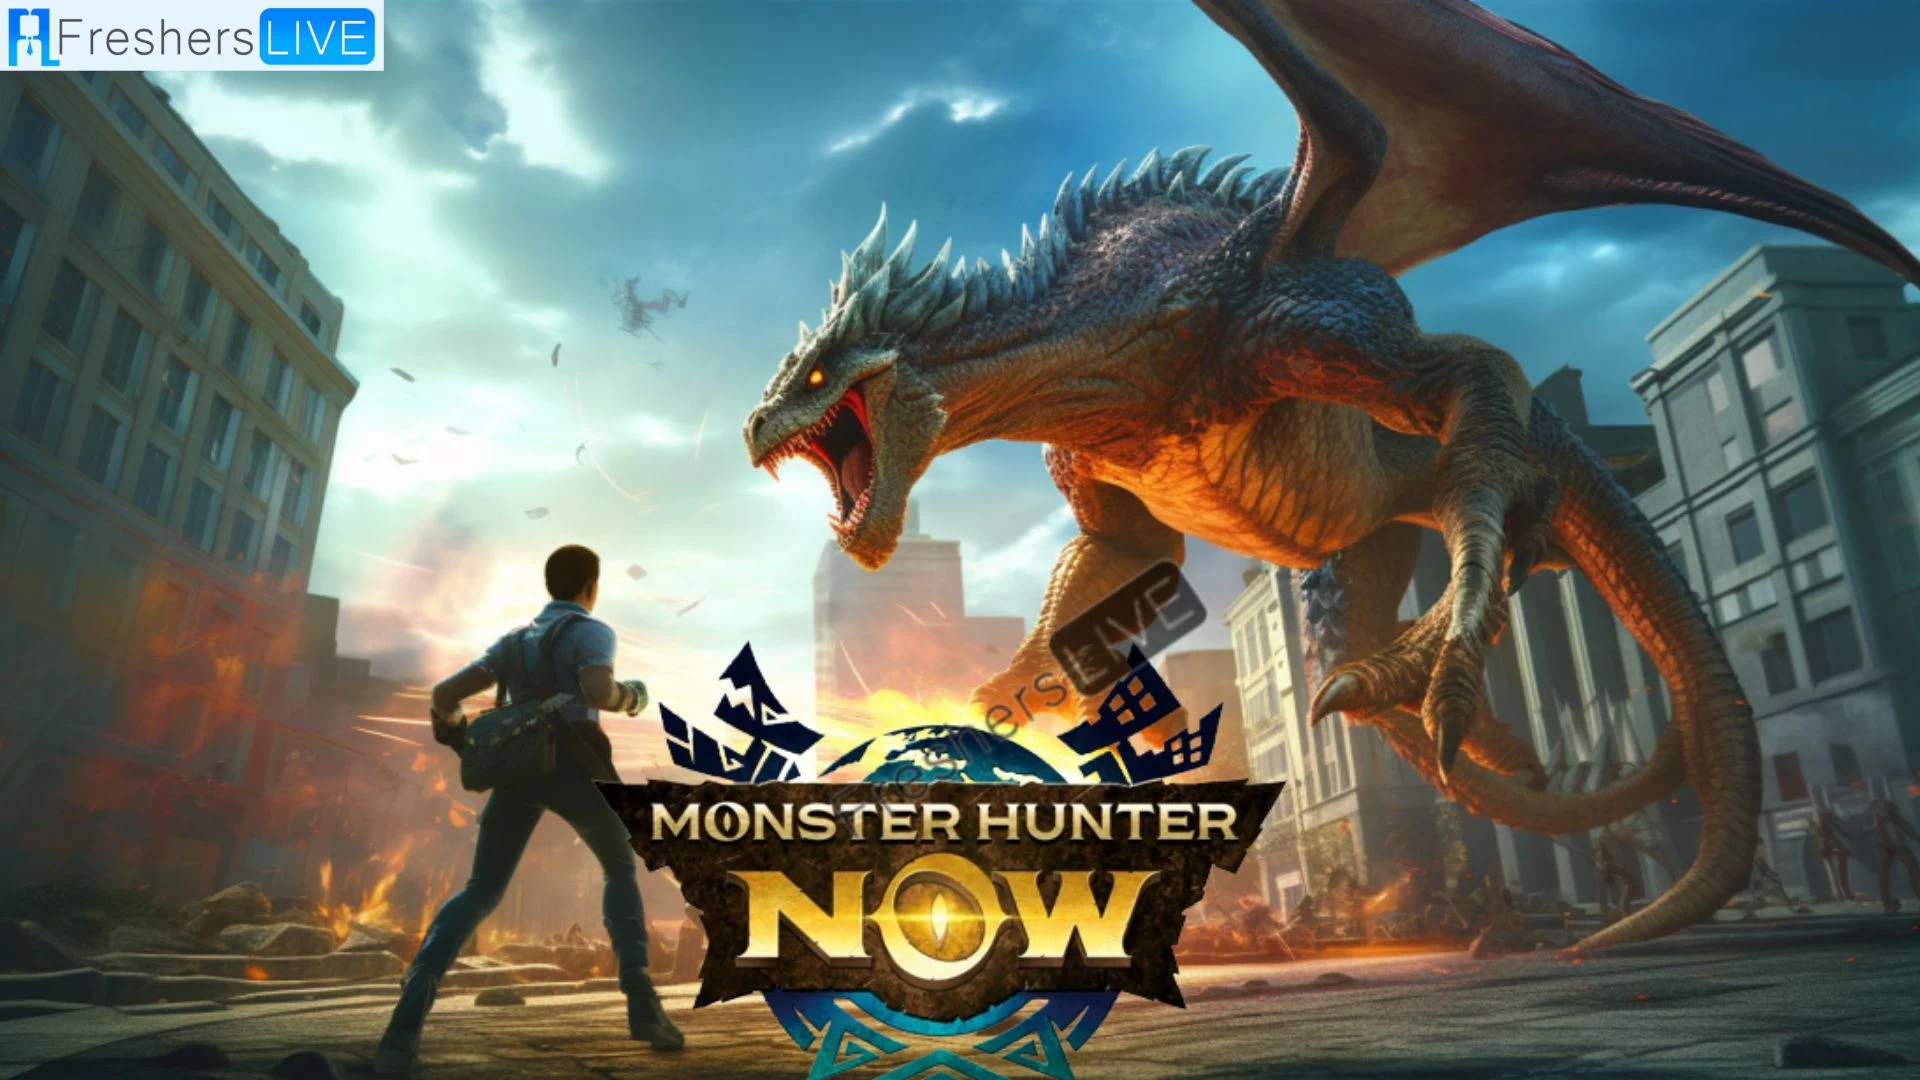 Monster Hunter Now Equipment Skills, What are Equipment Skills in Monster Hunter Now?